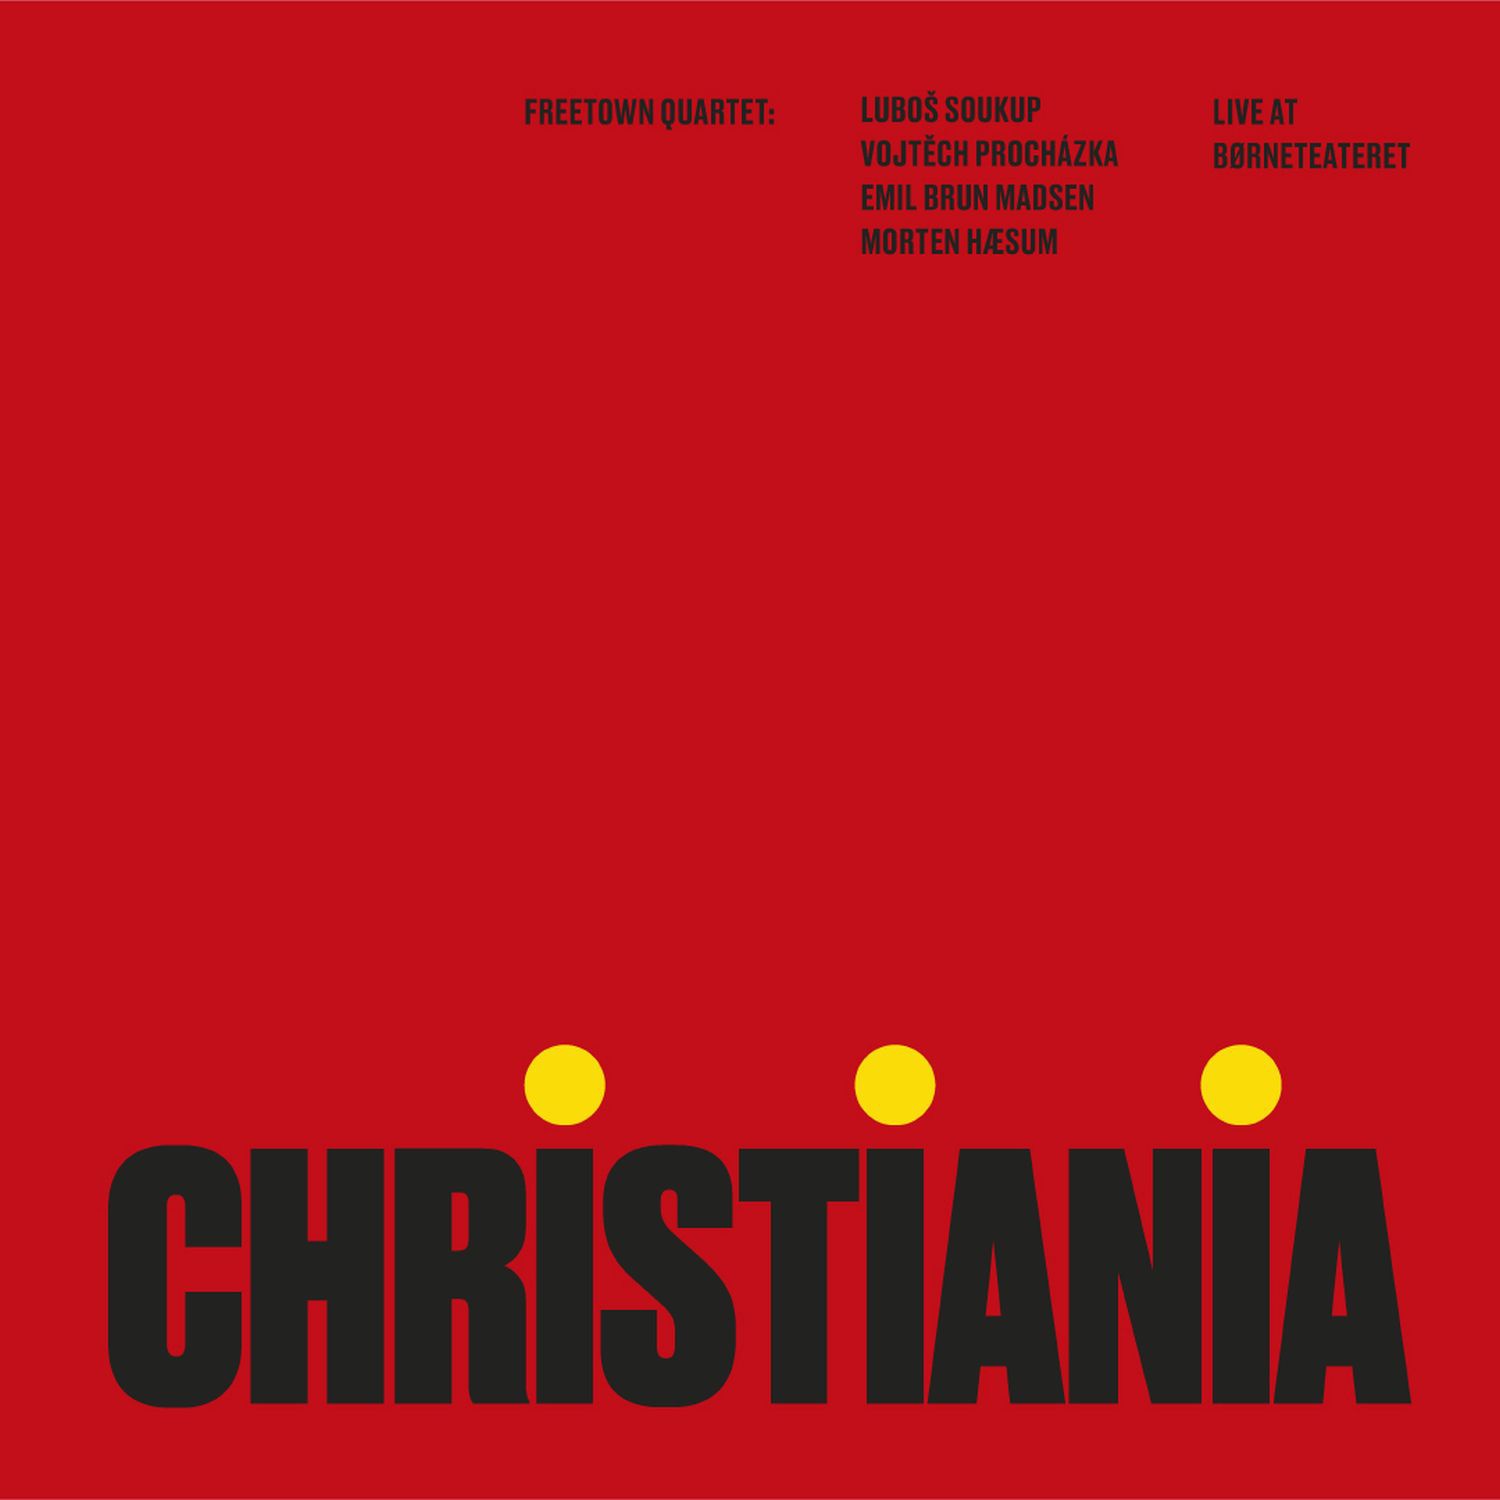 CD Shop - FREETOWN QUARTET CHRISTIANIA: LIVE AT BORNETEATERET